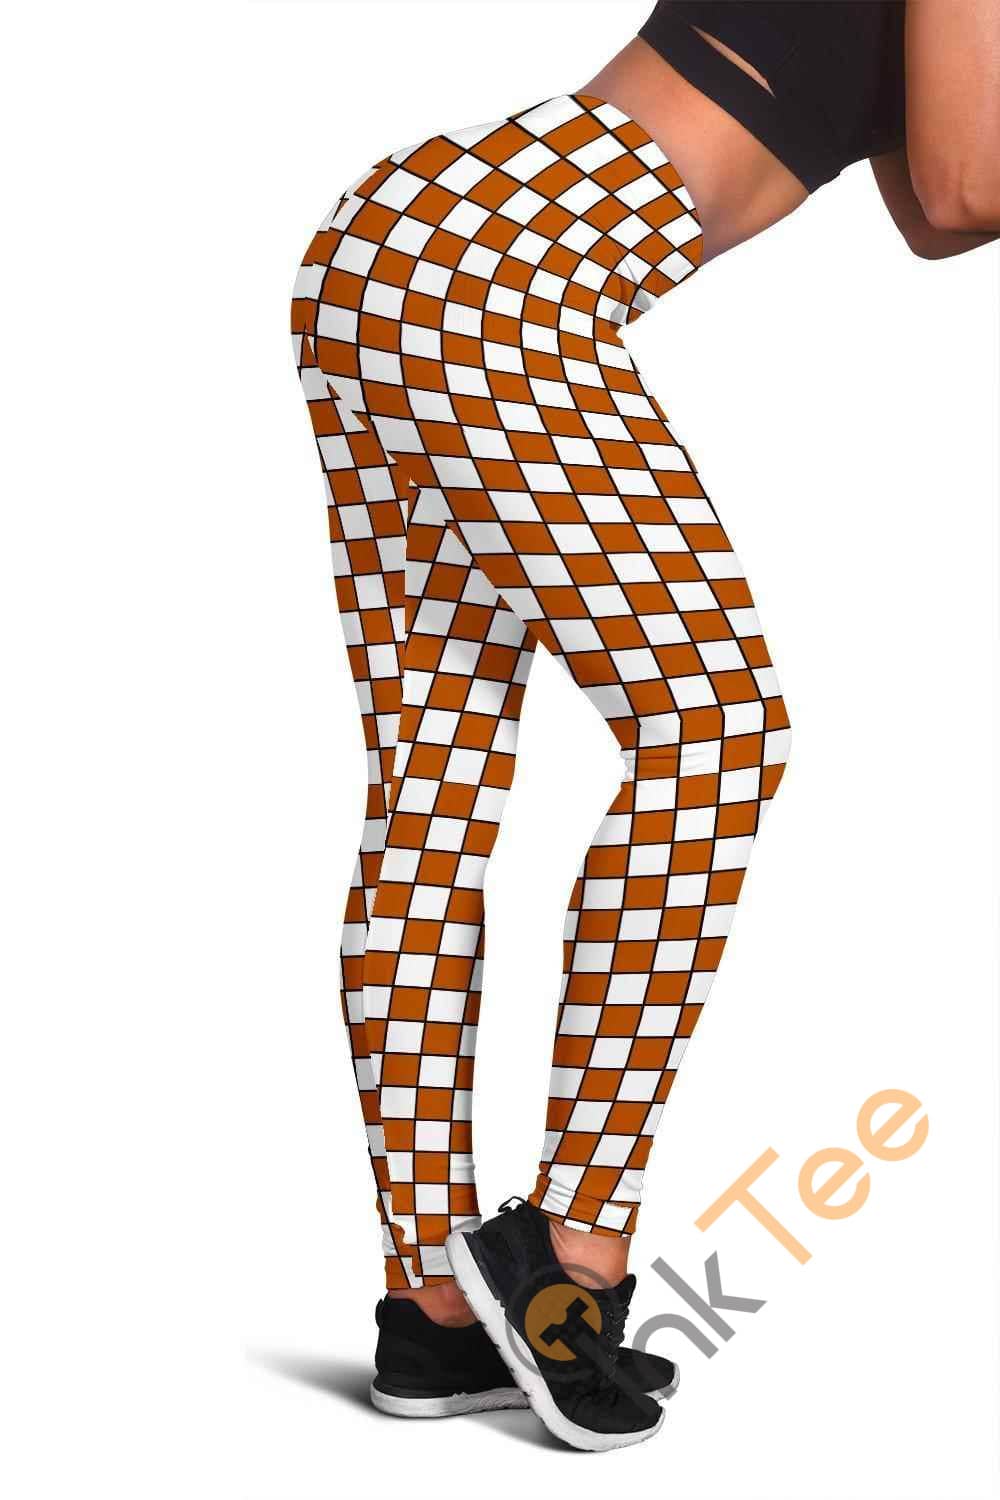 Inktee Store - Texas Longhorns Fan Inspired 3D All Over Print For Yoga Fitness Checkers Women'S Leggings Image